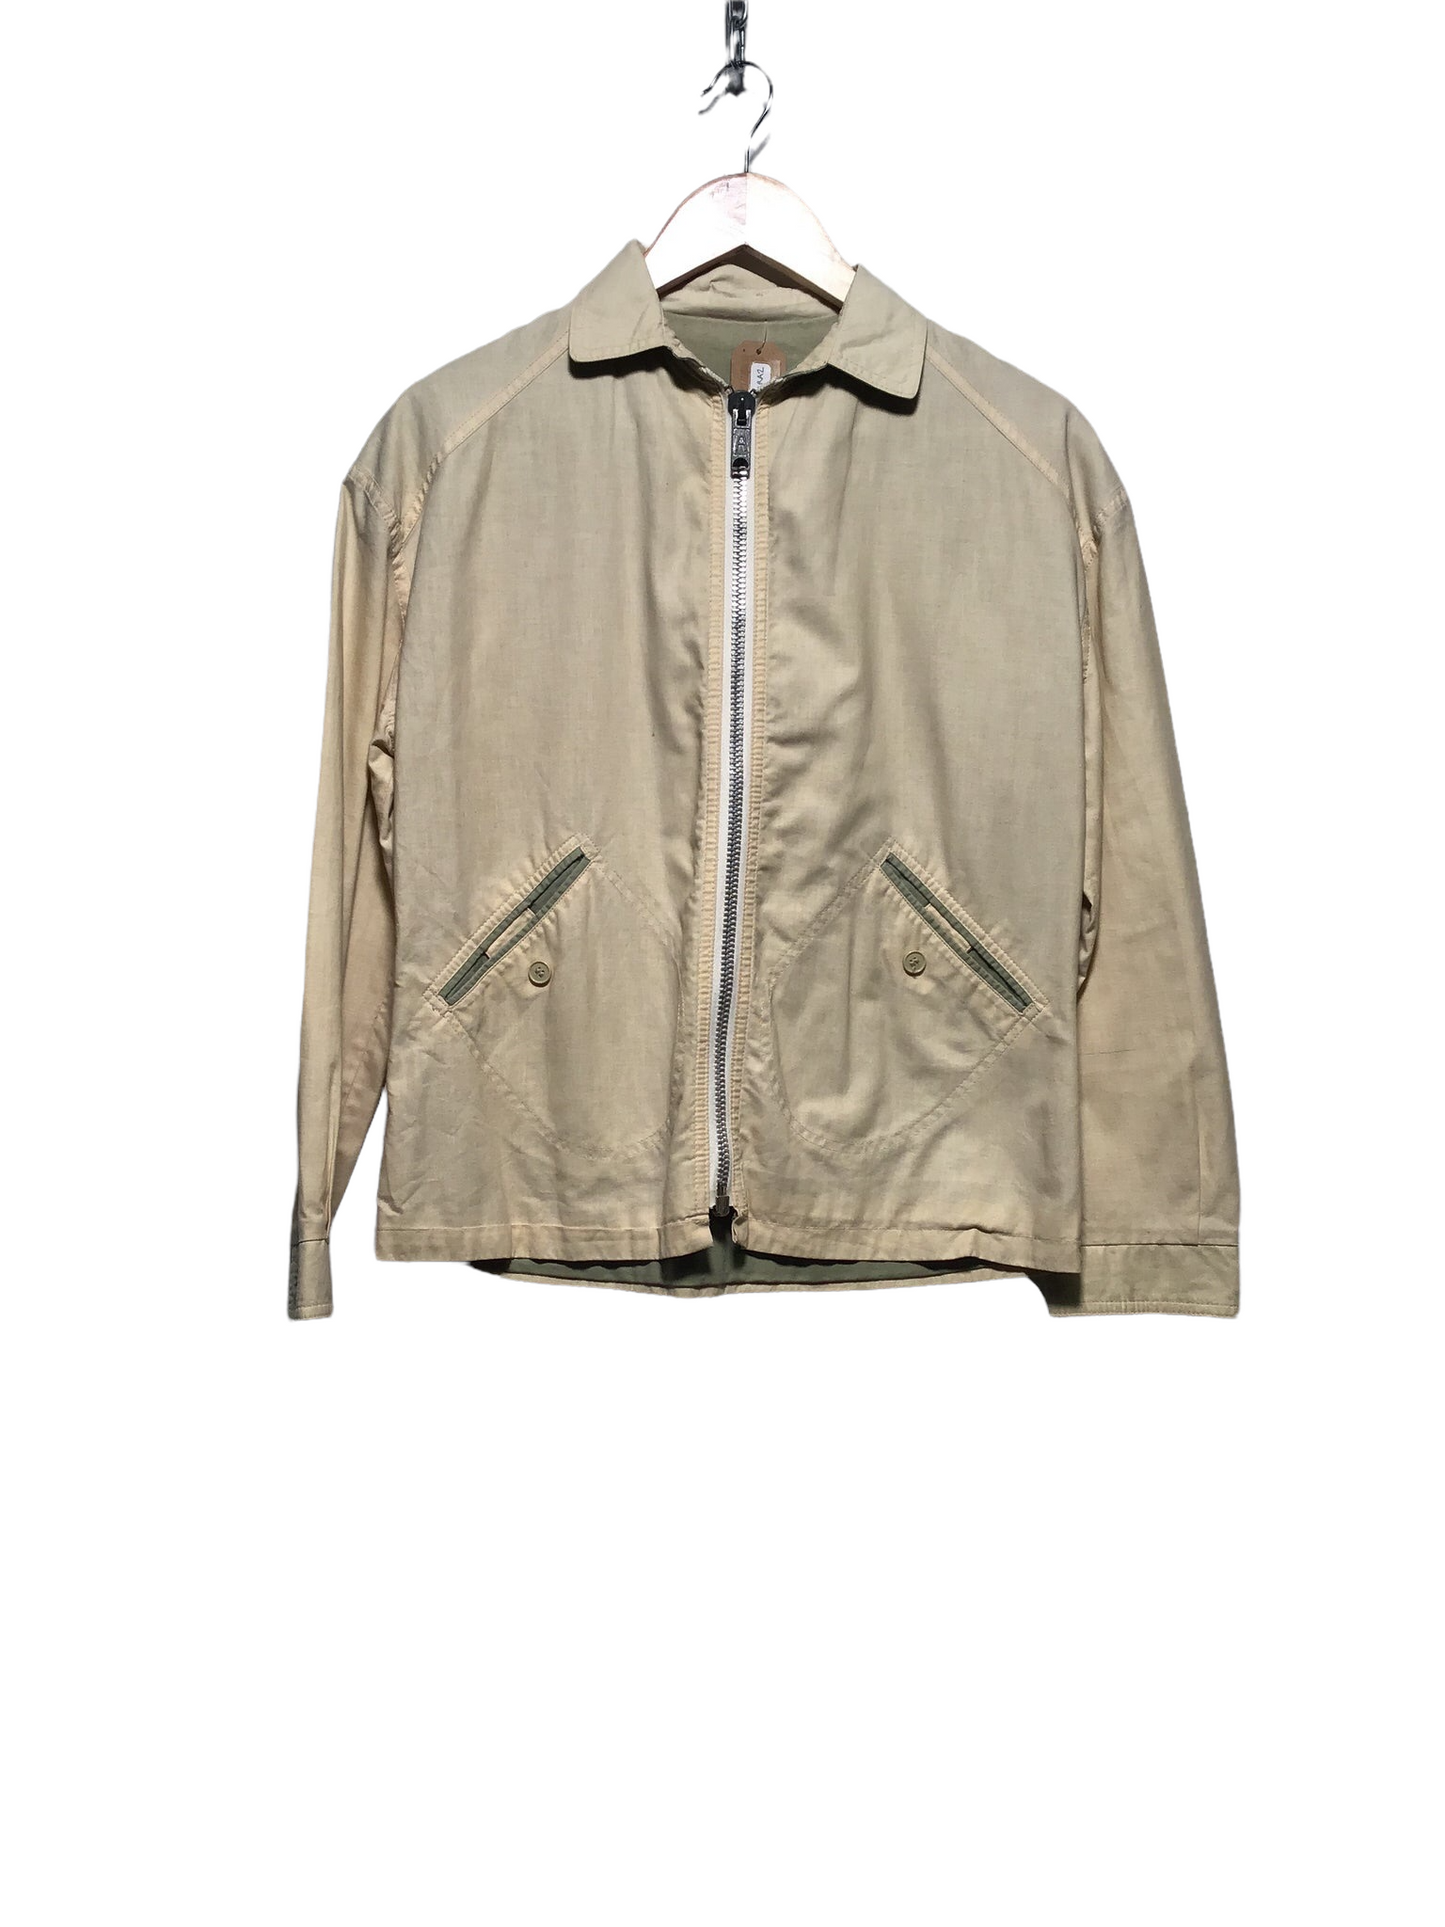 Zip Up Cotton Jacket (Size S)